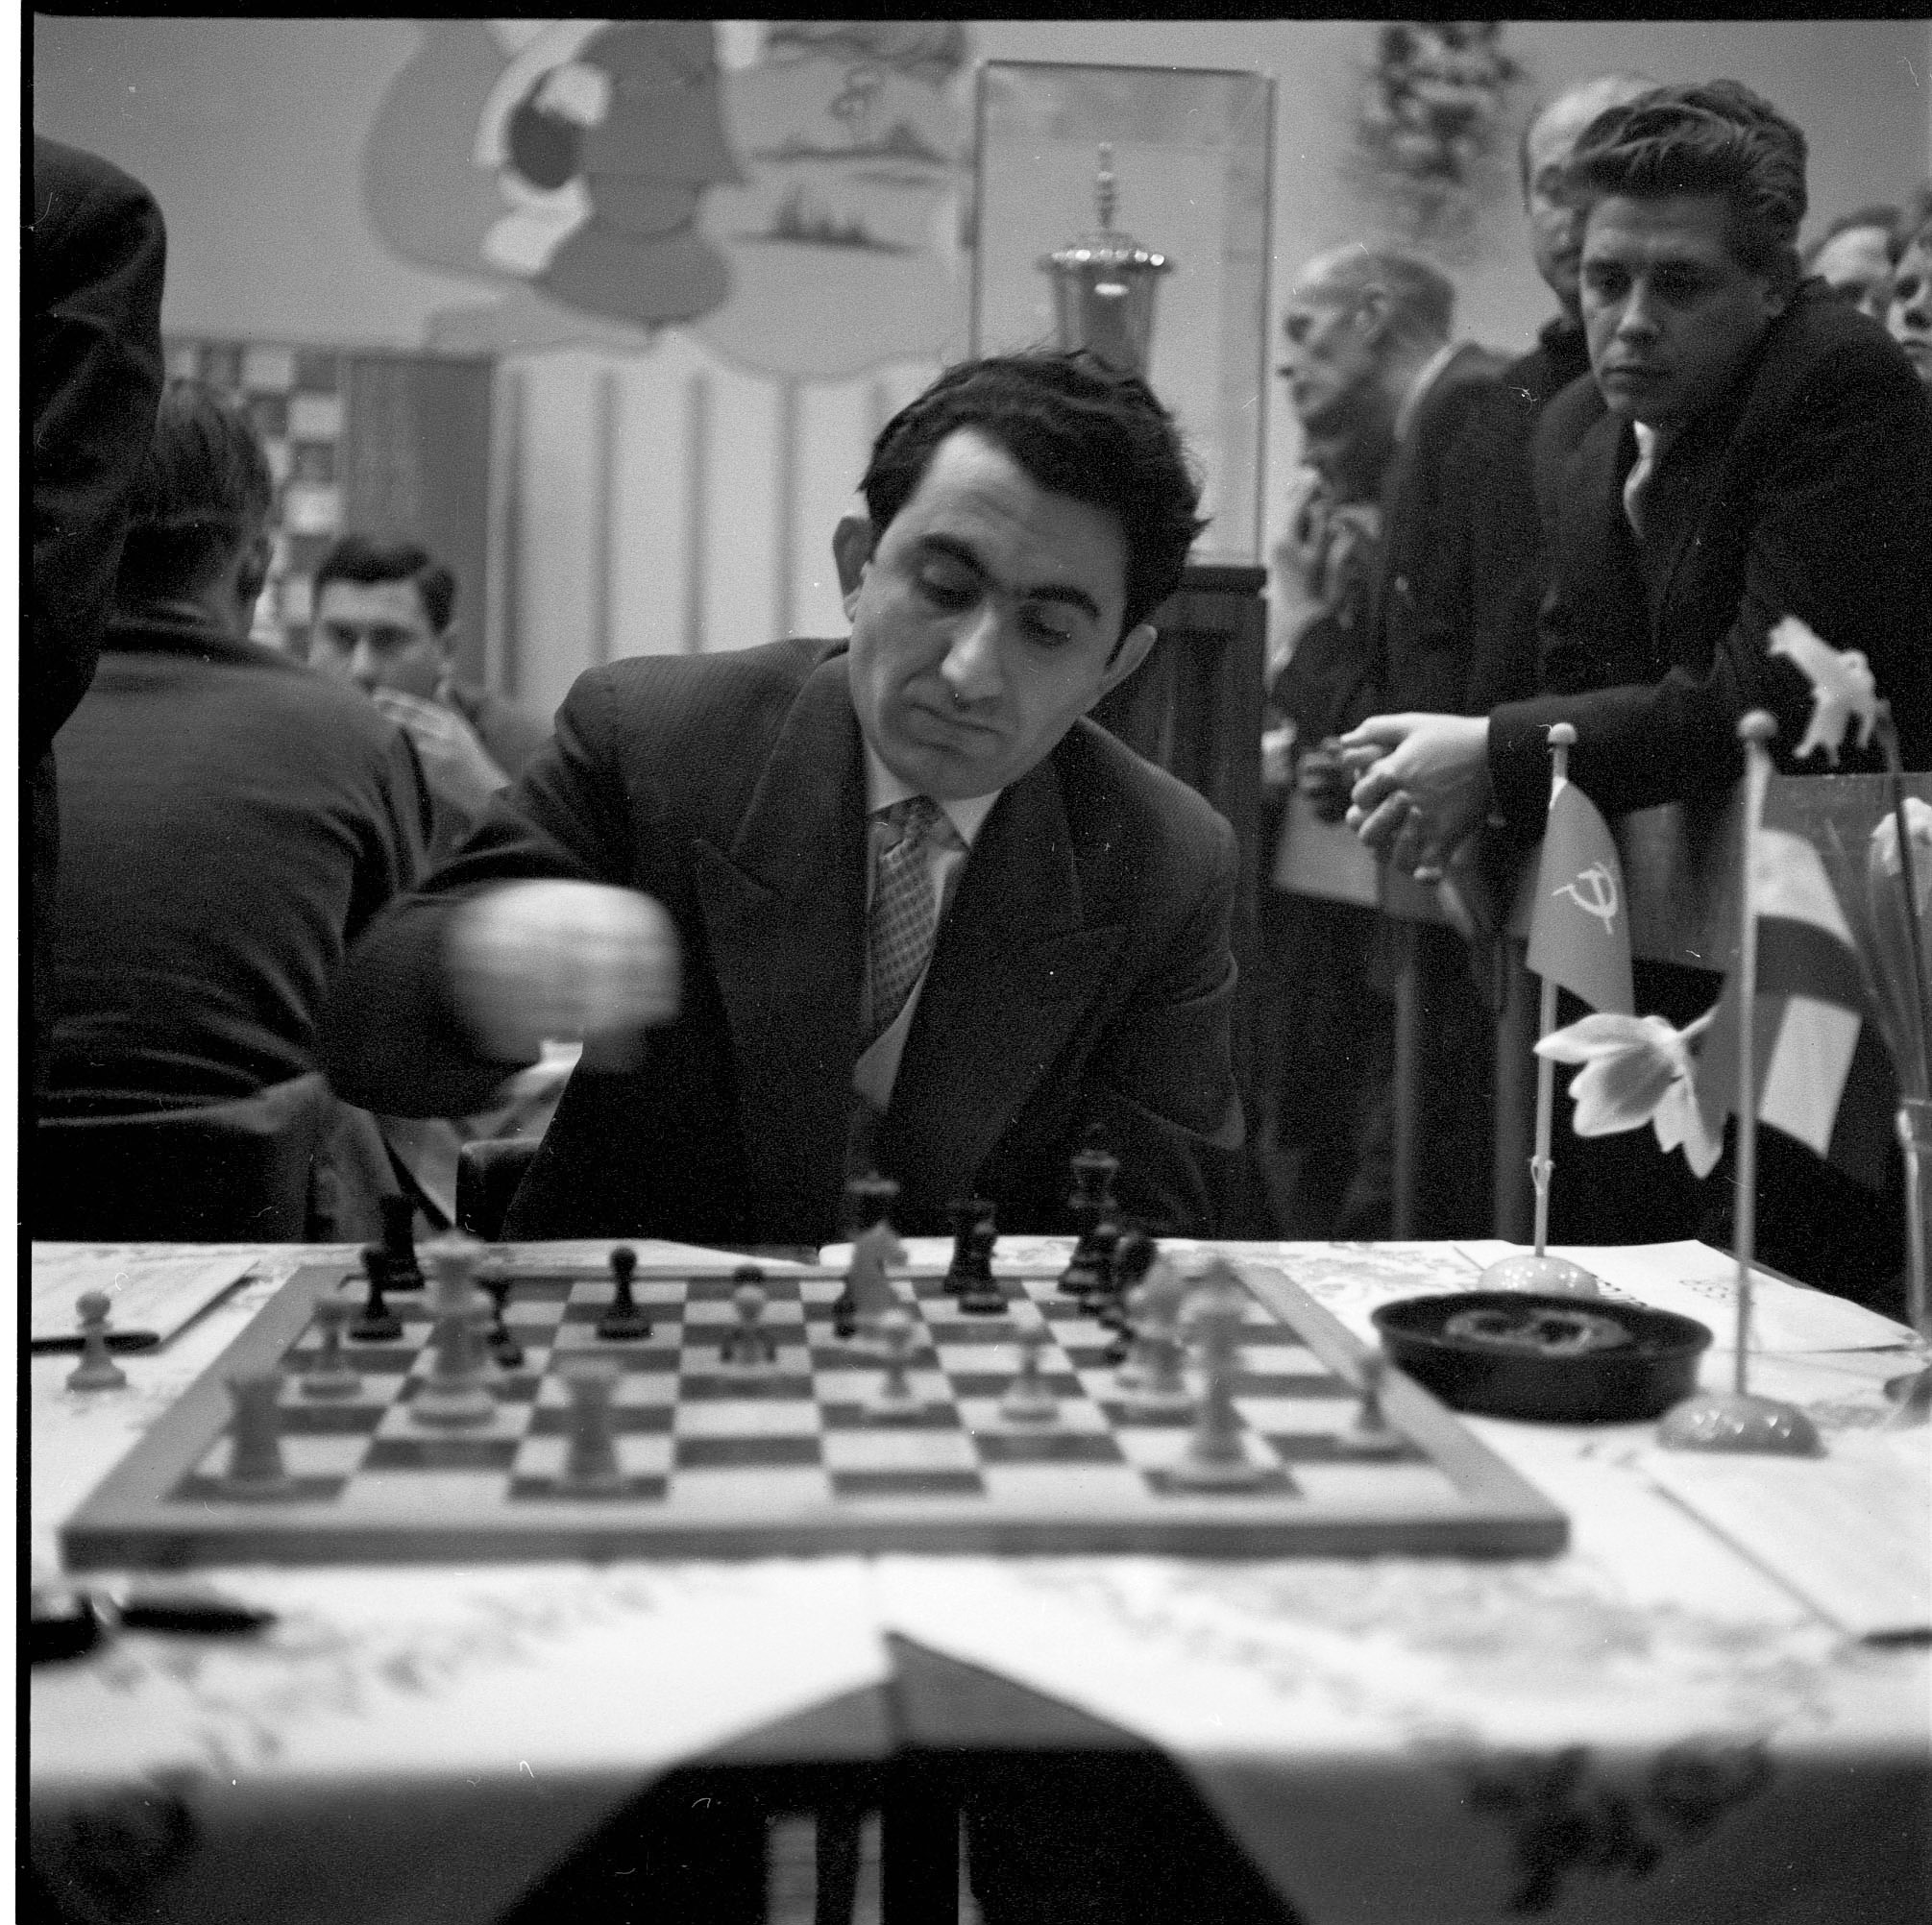 Play Like a World Champion: Tigran Petrosian